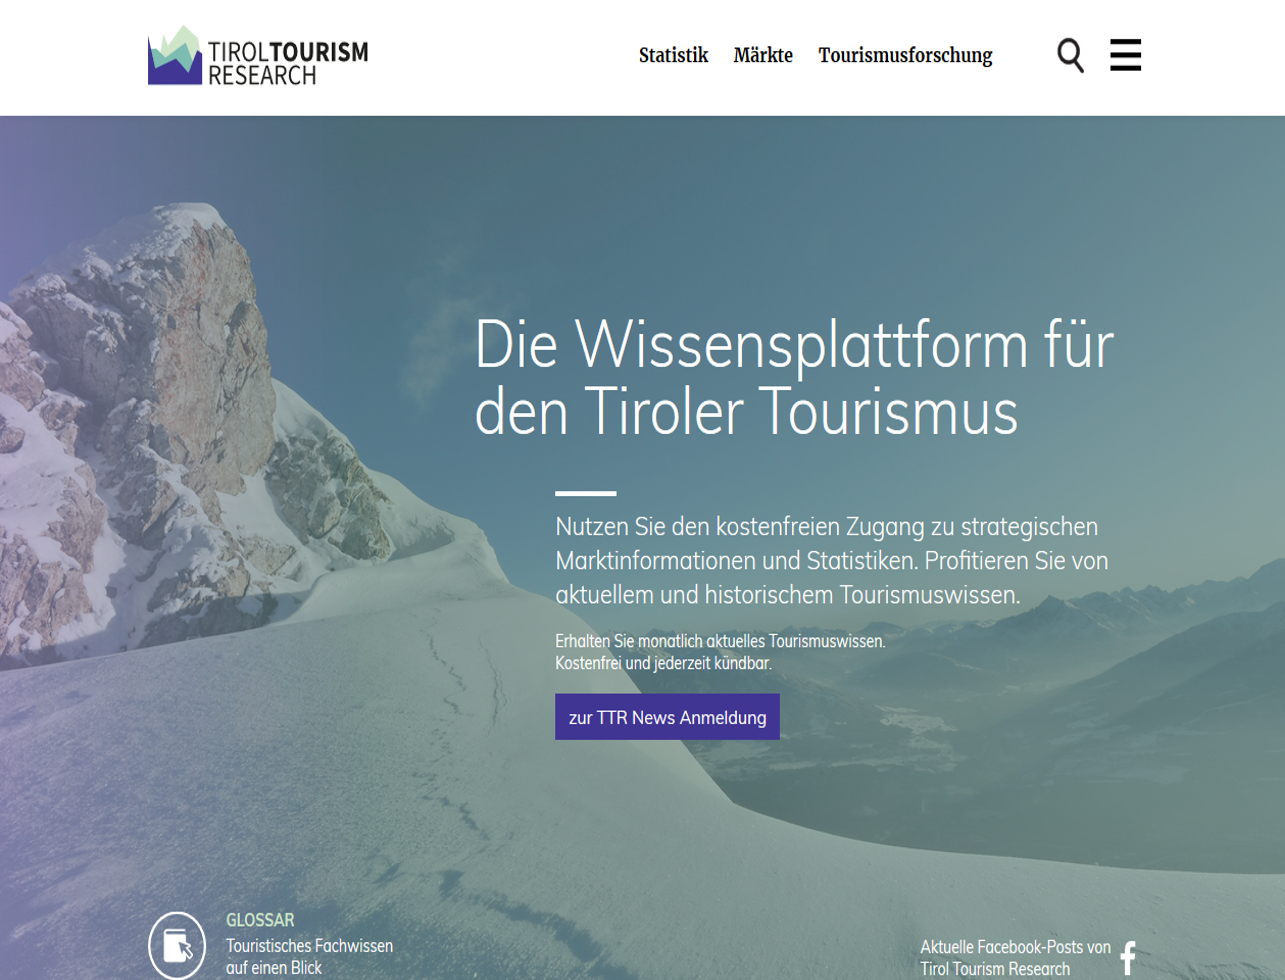 TTR 3.0 Tirol Tourism Research